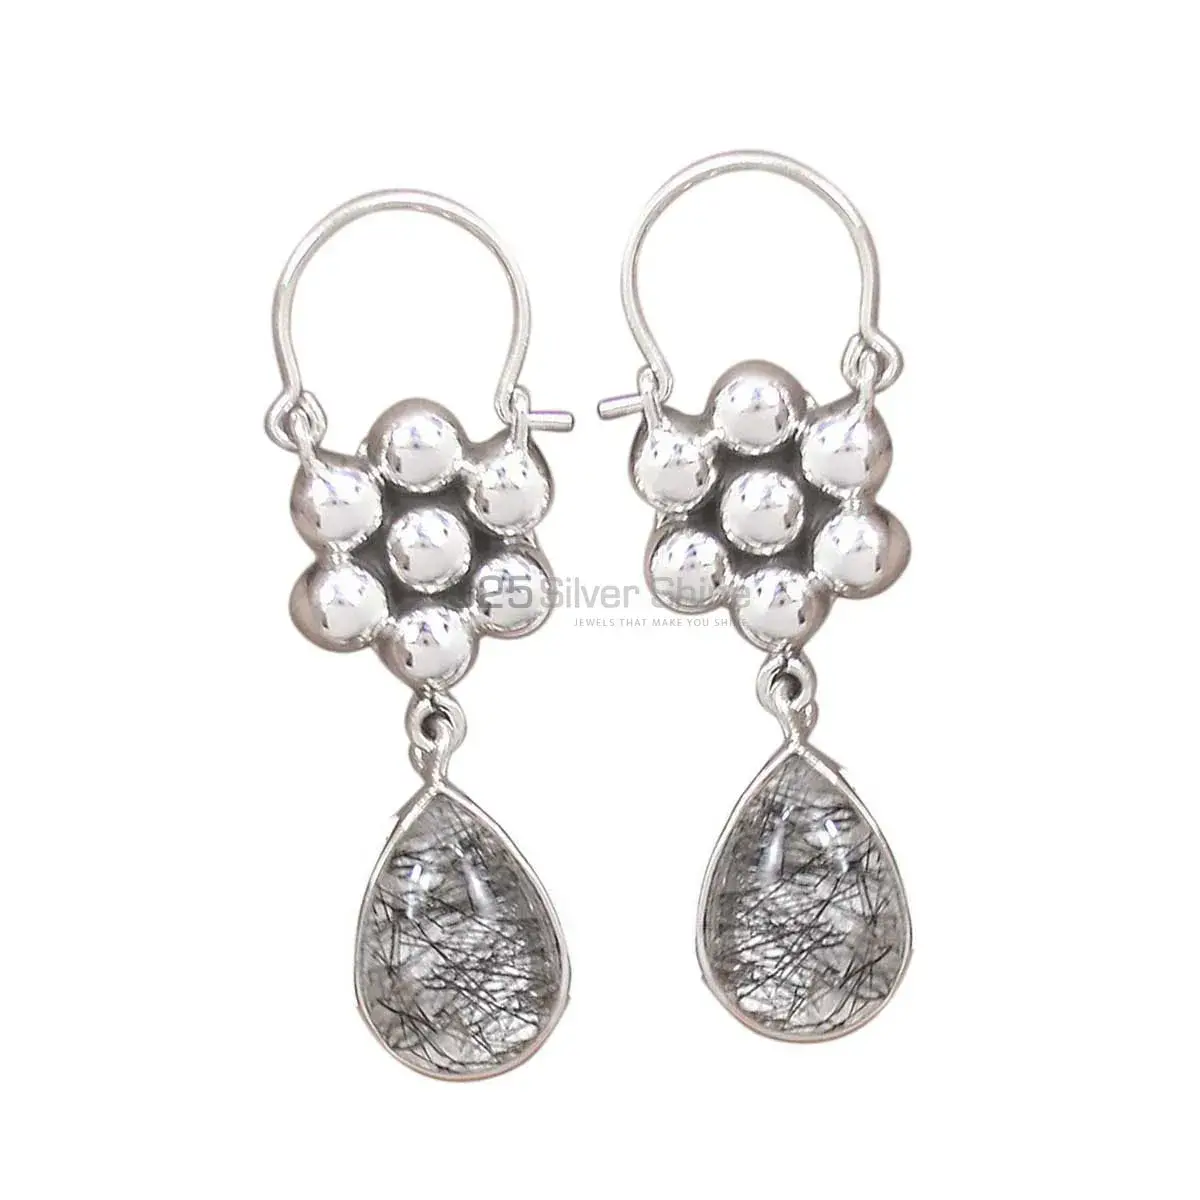 Natural Black Rutile Gemstone Earrings Suppliers In 925 Sterling Silver Jewelry 925SE3079